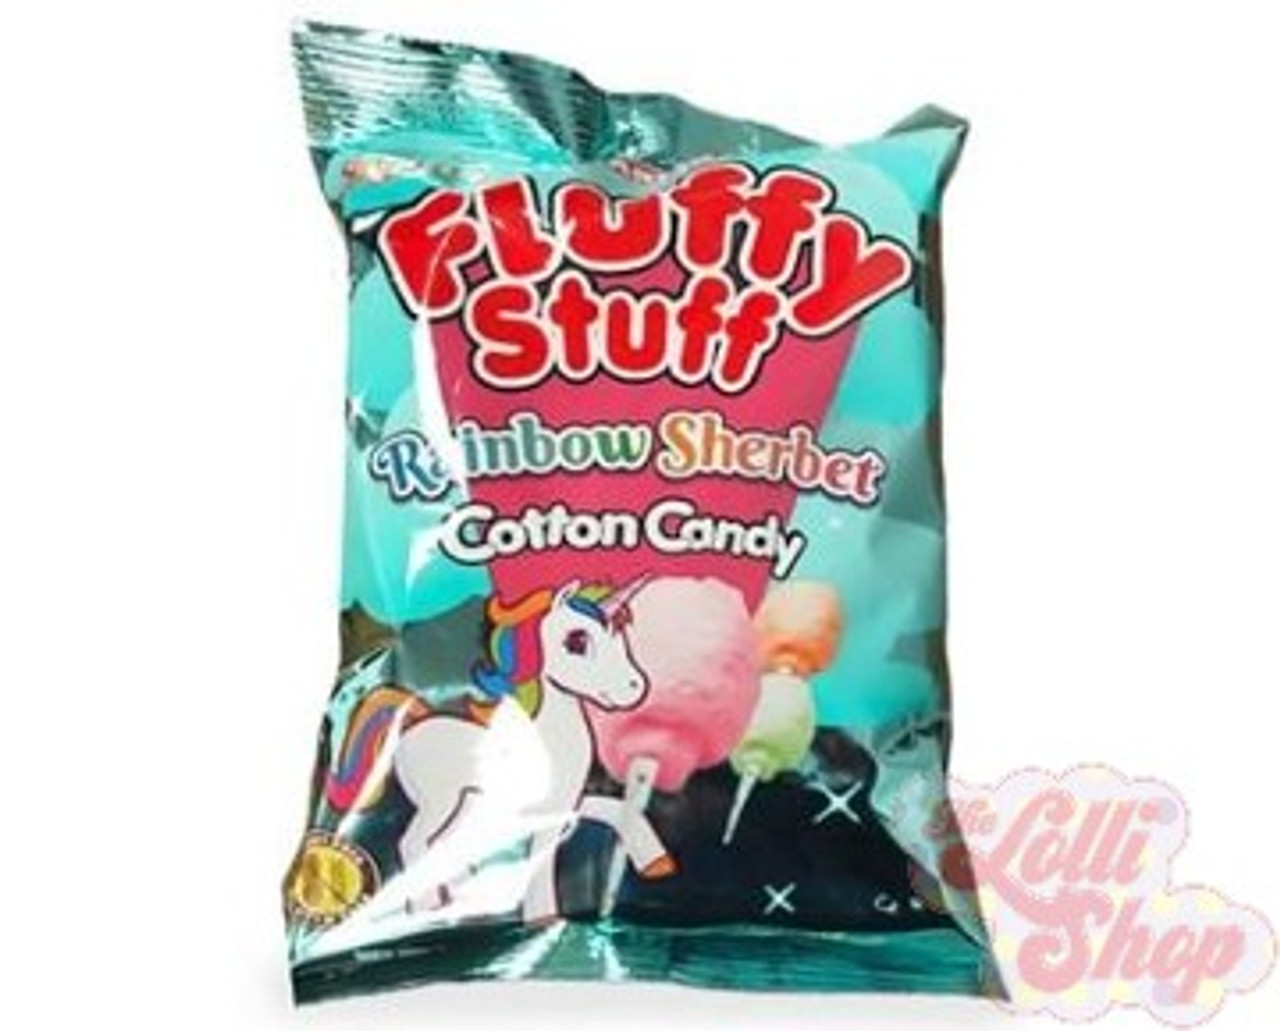 Charms Fluffy Stuff Unicorn Sherbet Cotton Candy